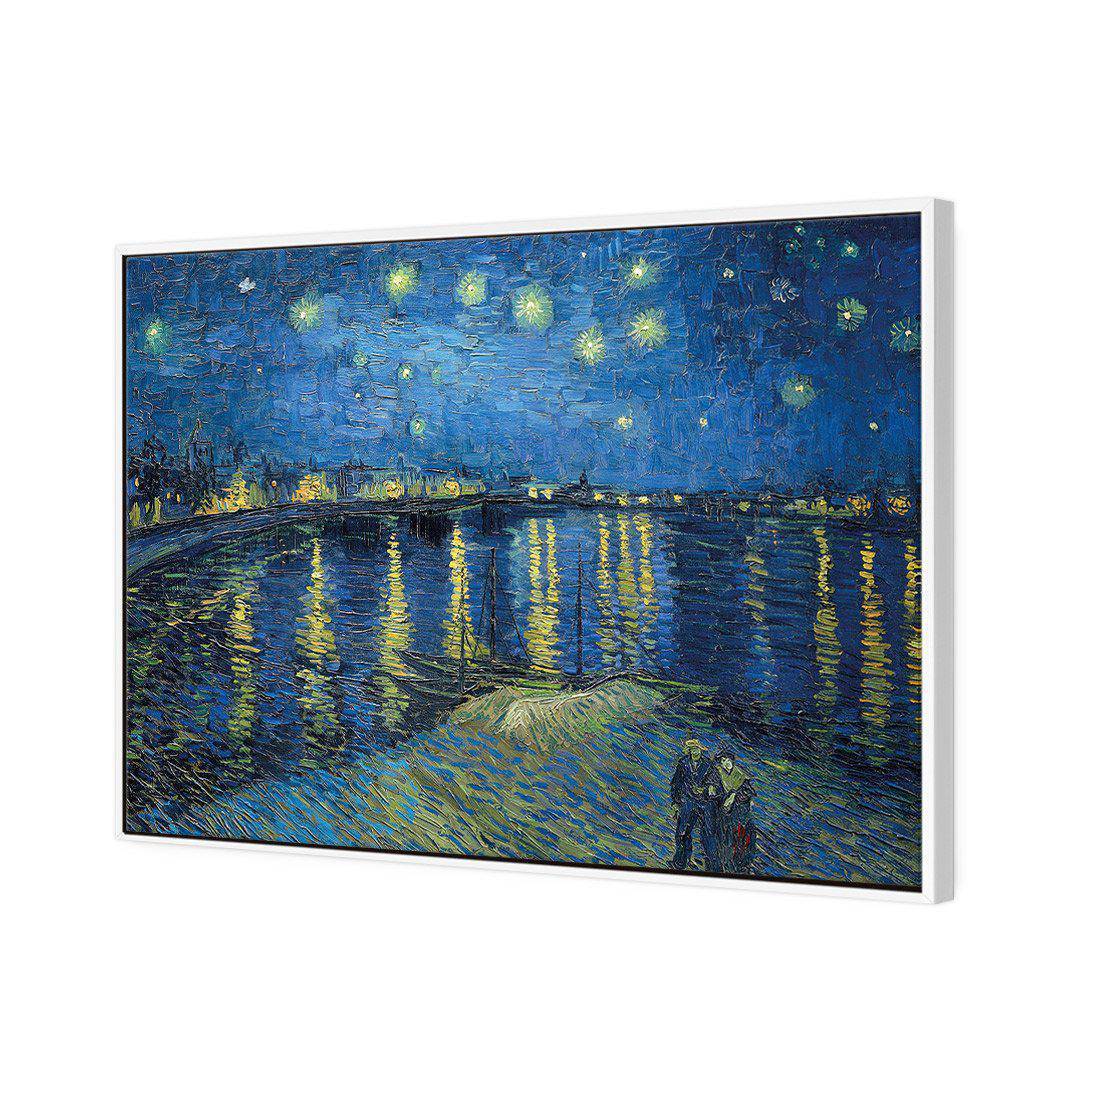 Starry Night Over the Rhone - Van Gogh Canvas Art-Canvas-Wall Art Designs-45x30cm-Canvas - White Frame-Wall Art Designs